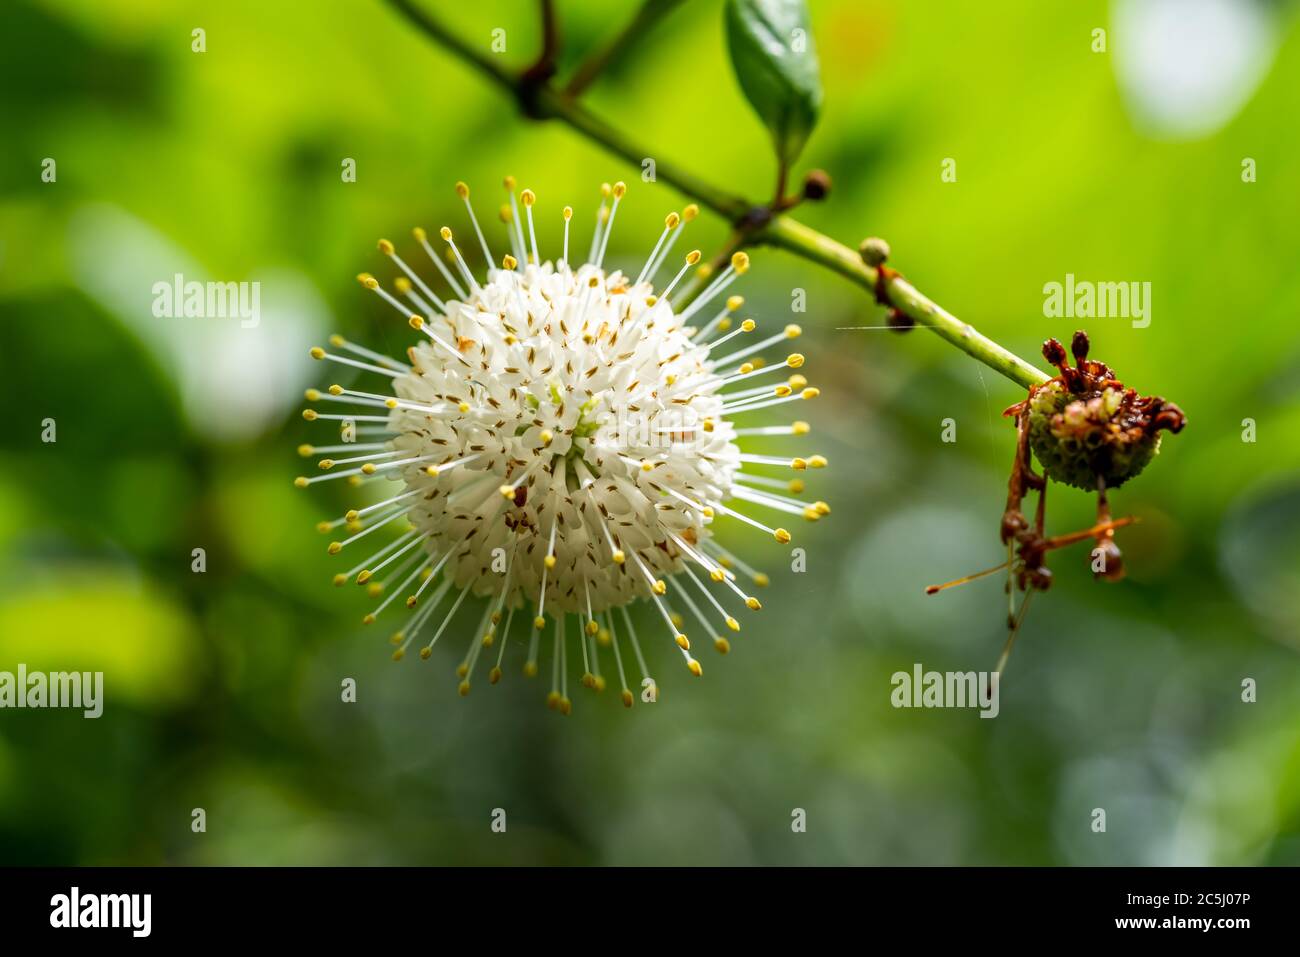 I found this seed pod interesting because it looks like the coronavirus Stock Photo